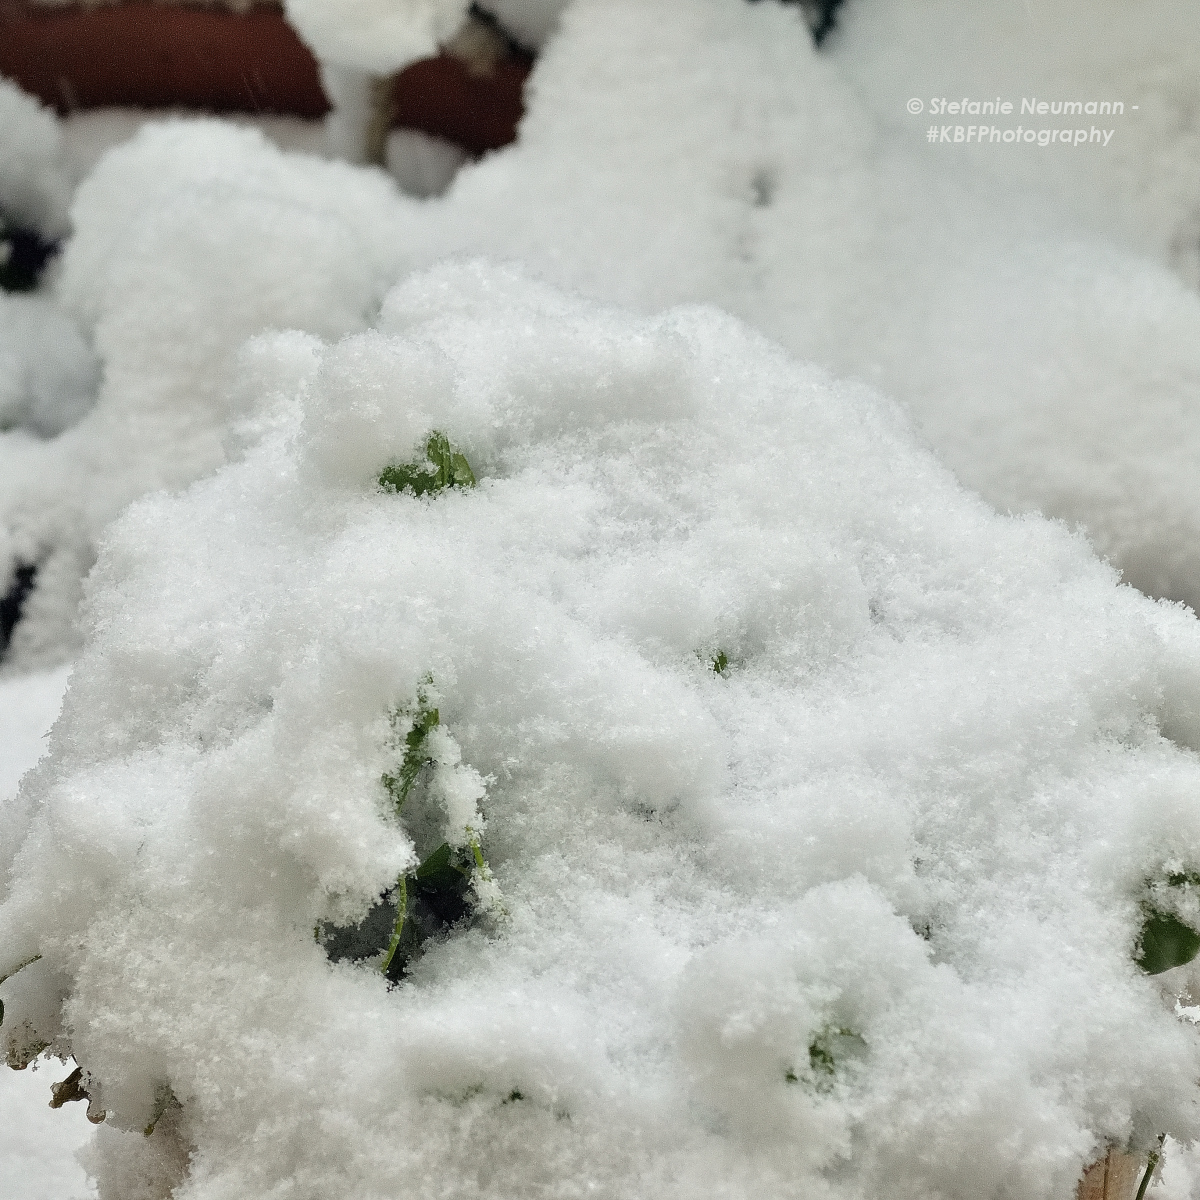 KBFB_2022-04-26-23 © Stefanie Neumann - #KBFPhotography – All Rights Reserved. Bildbeschreibung – Image Description: Grüne Weißkleeblätter complett schneebedeckt. Green white clover leaves completely snow-covered.